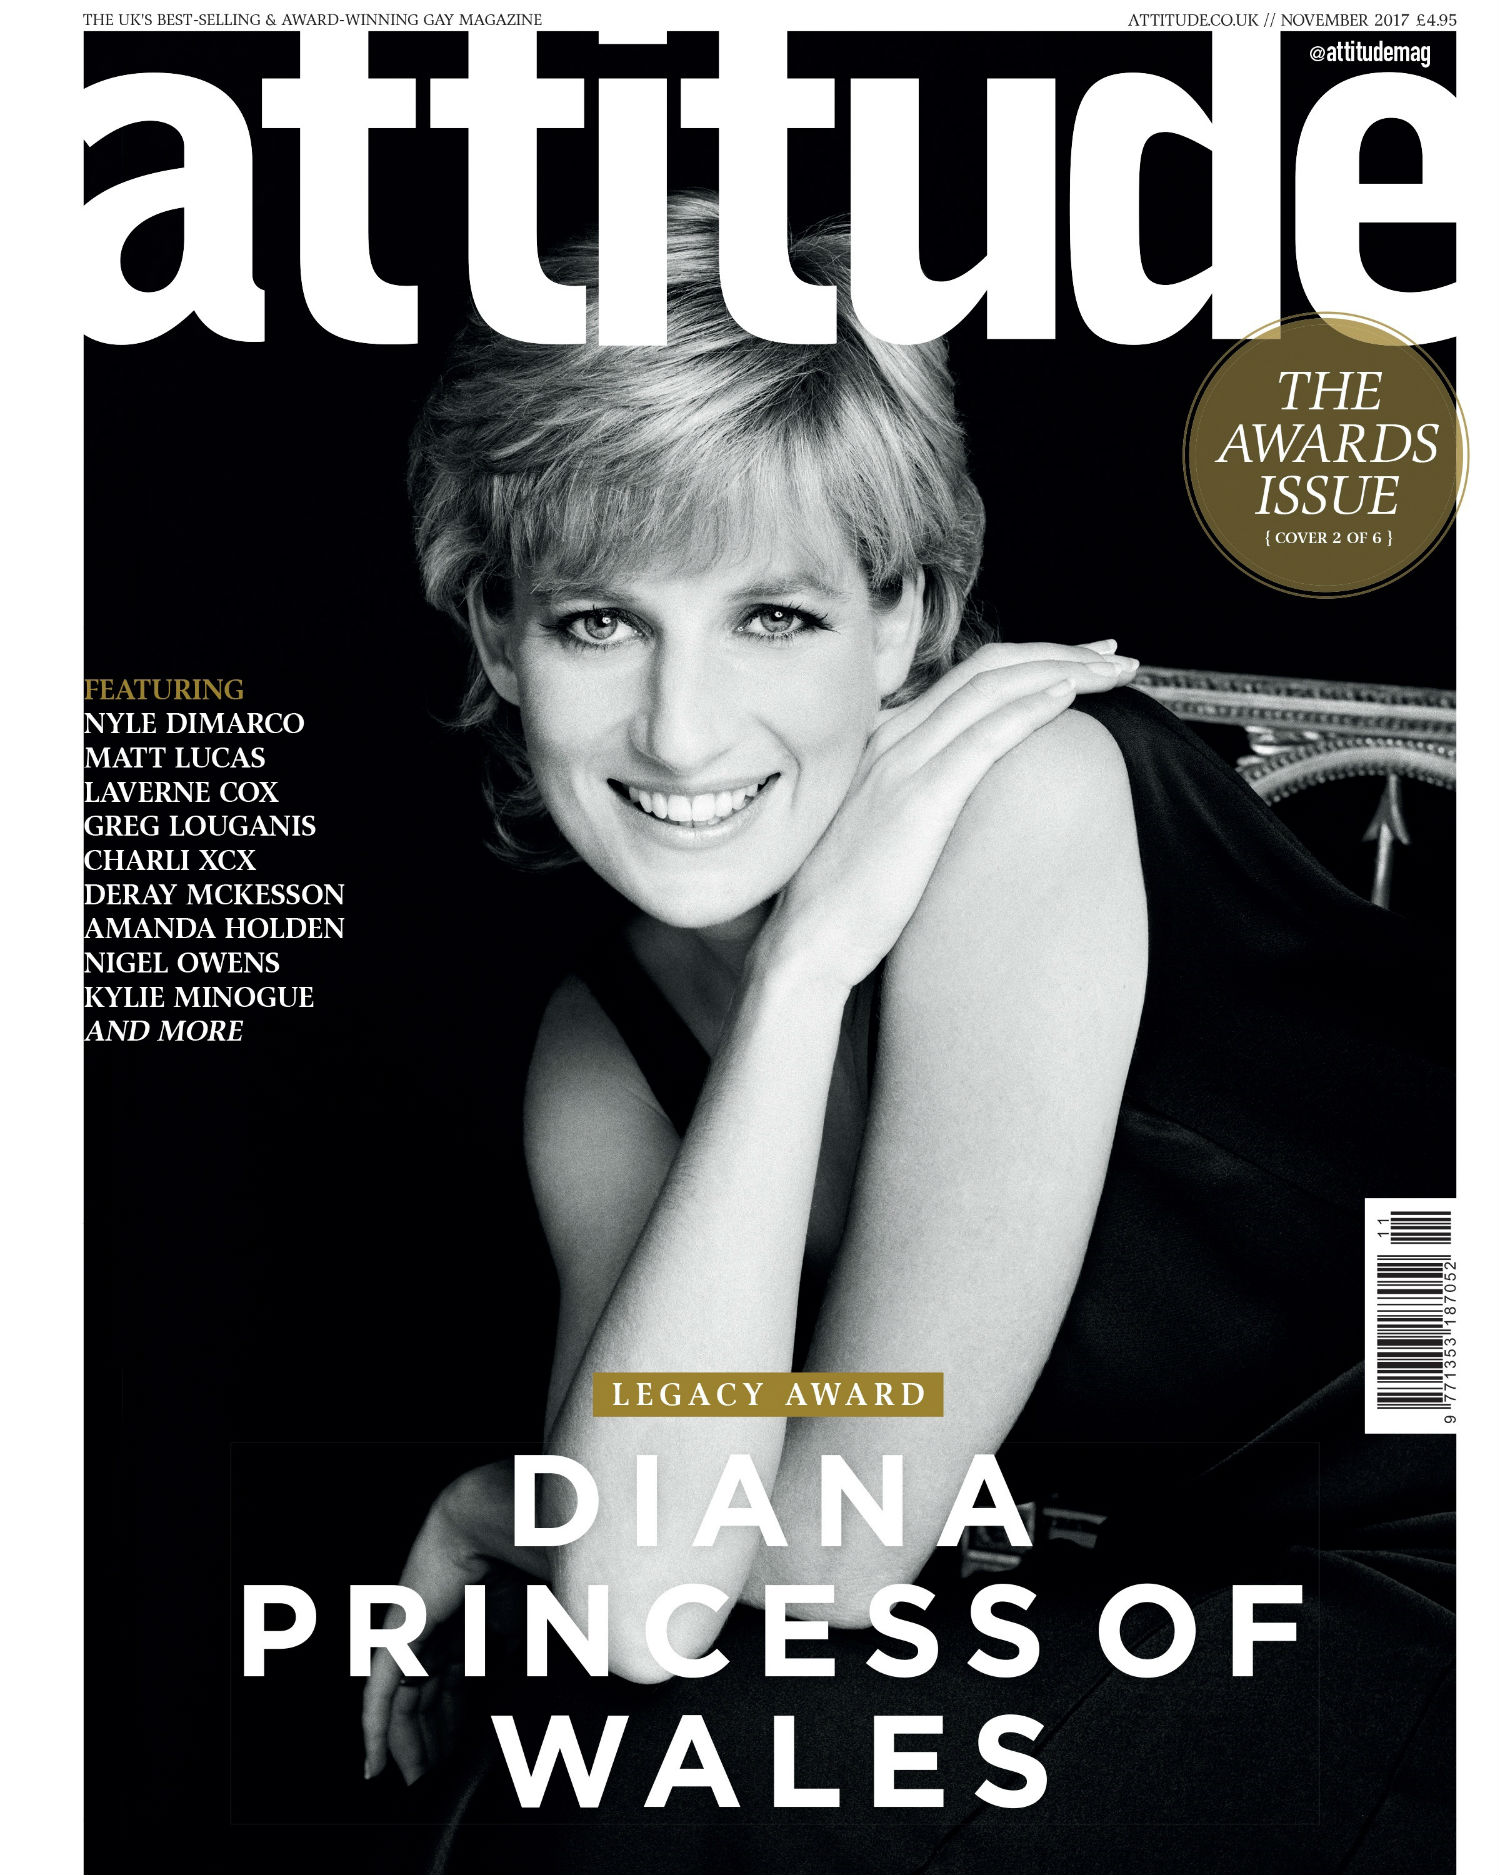 Prince Diana graces the cover of Attitude magazine.